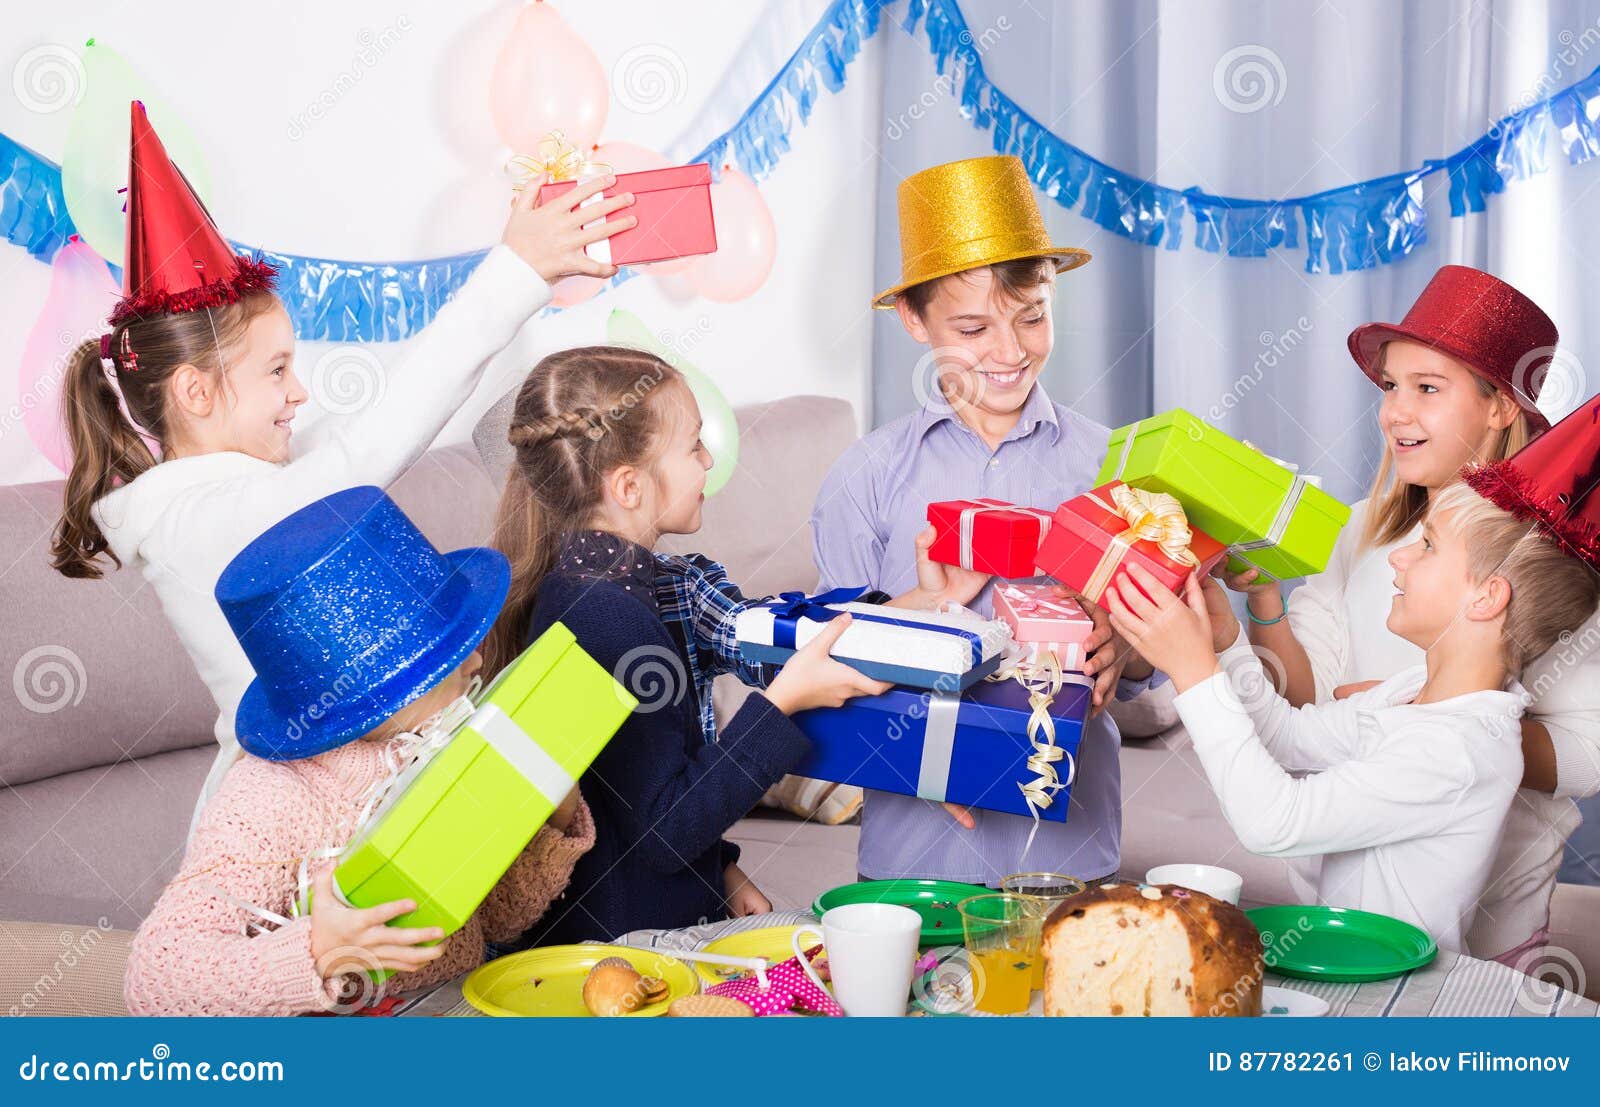 Smiling Children Handing Gifts To Birthday Boy Stock Image - Image of ...